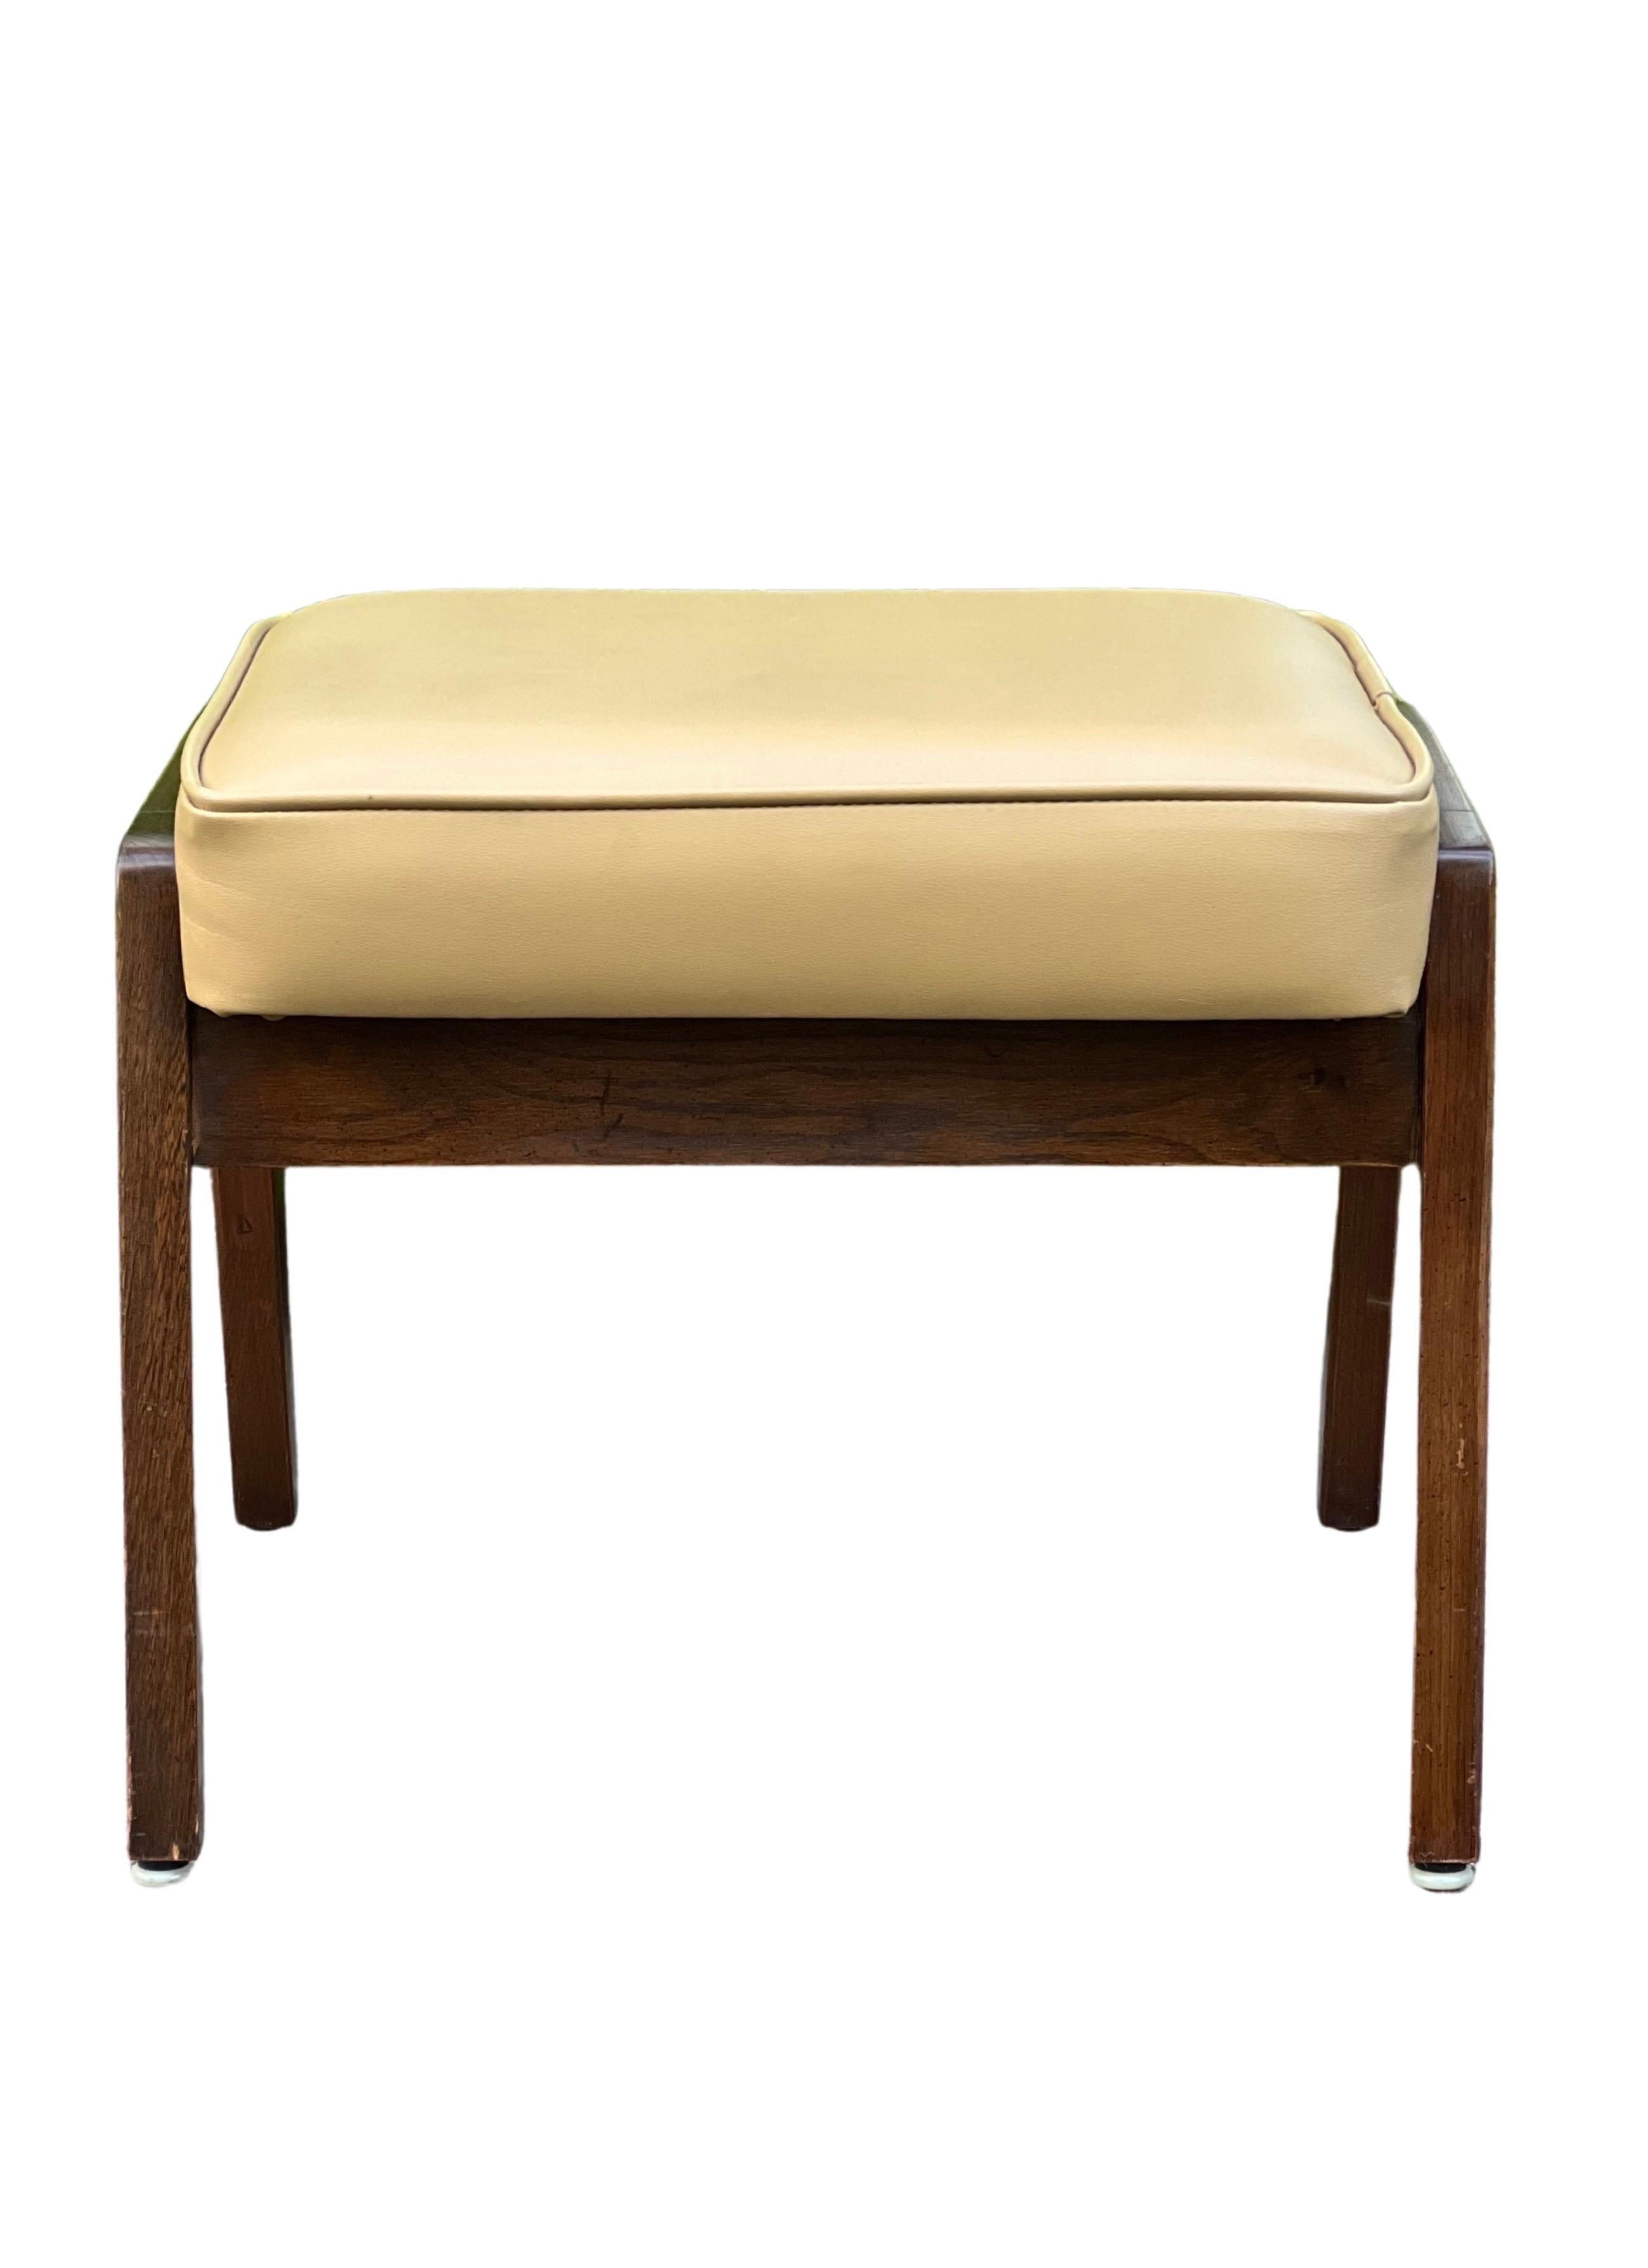 20th Century Vintage Mid Century Modern Walnut Upholstered Footstool For Sale